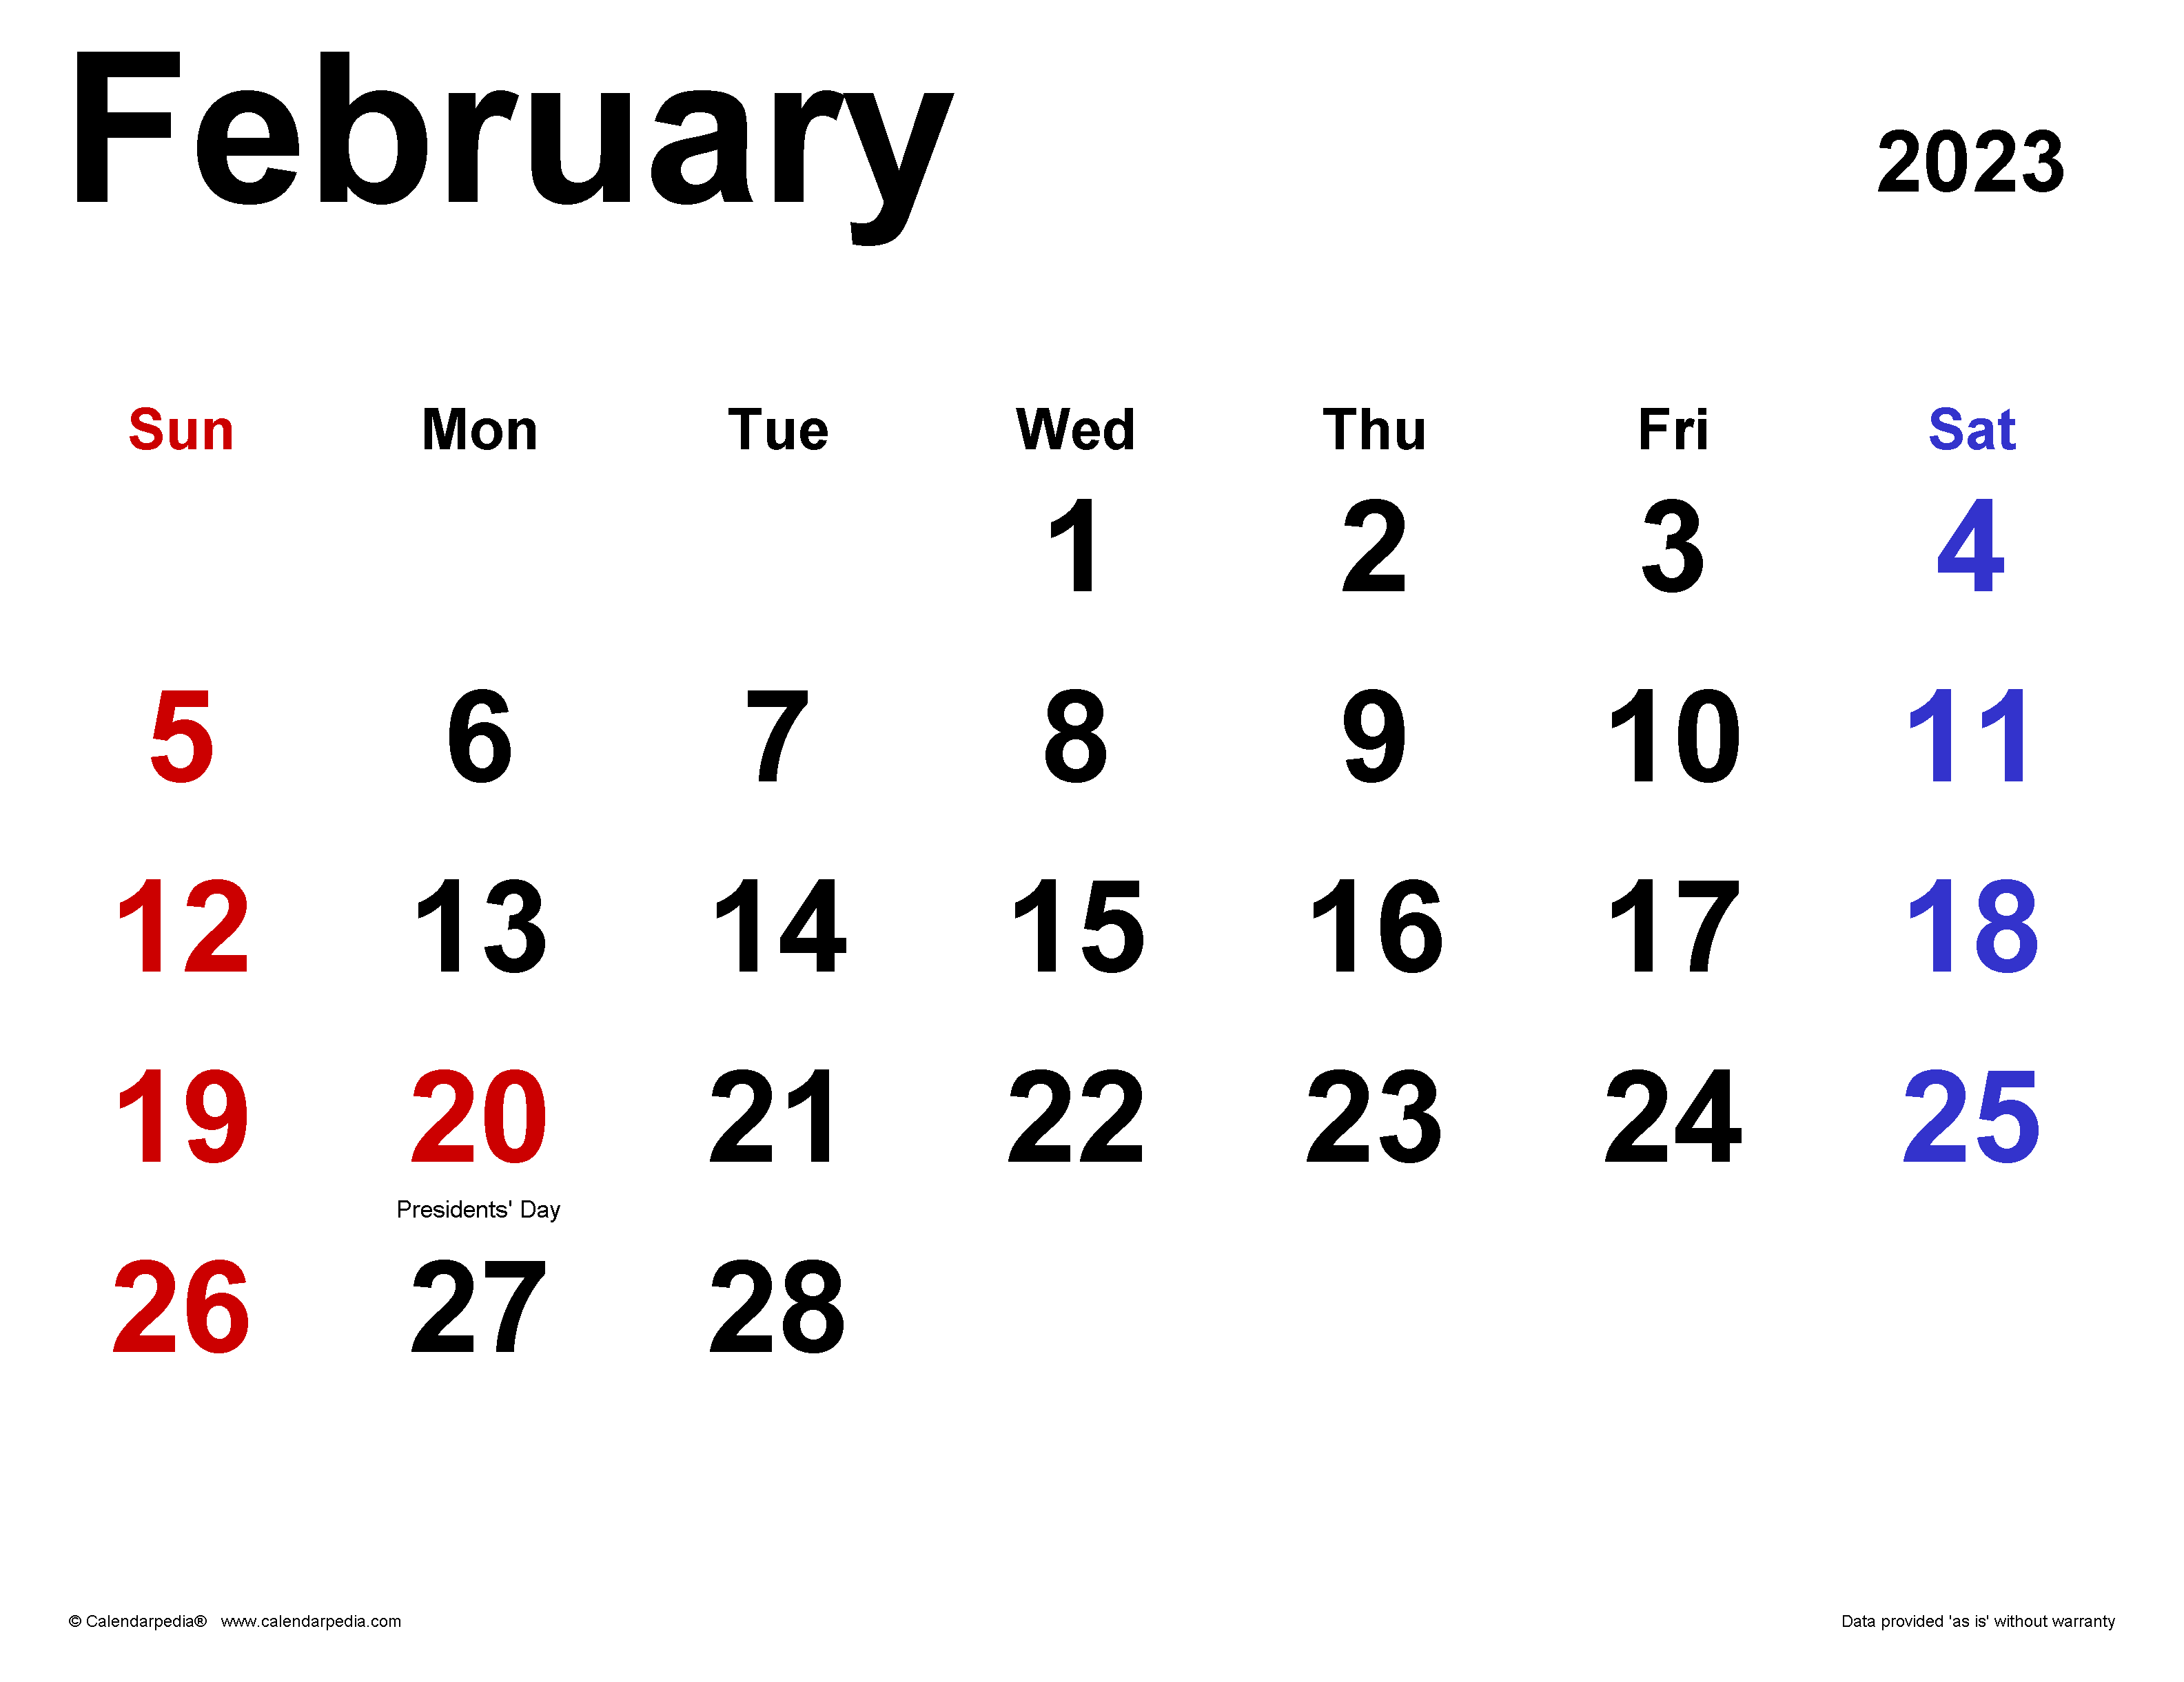 February 2023 Calendar. for Word, Excel